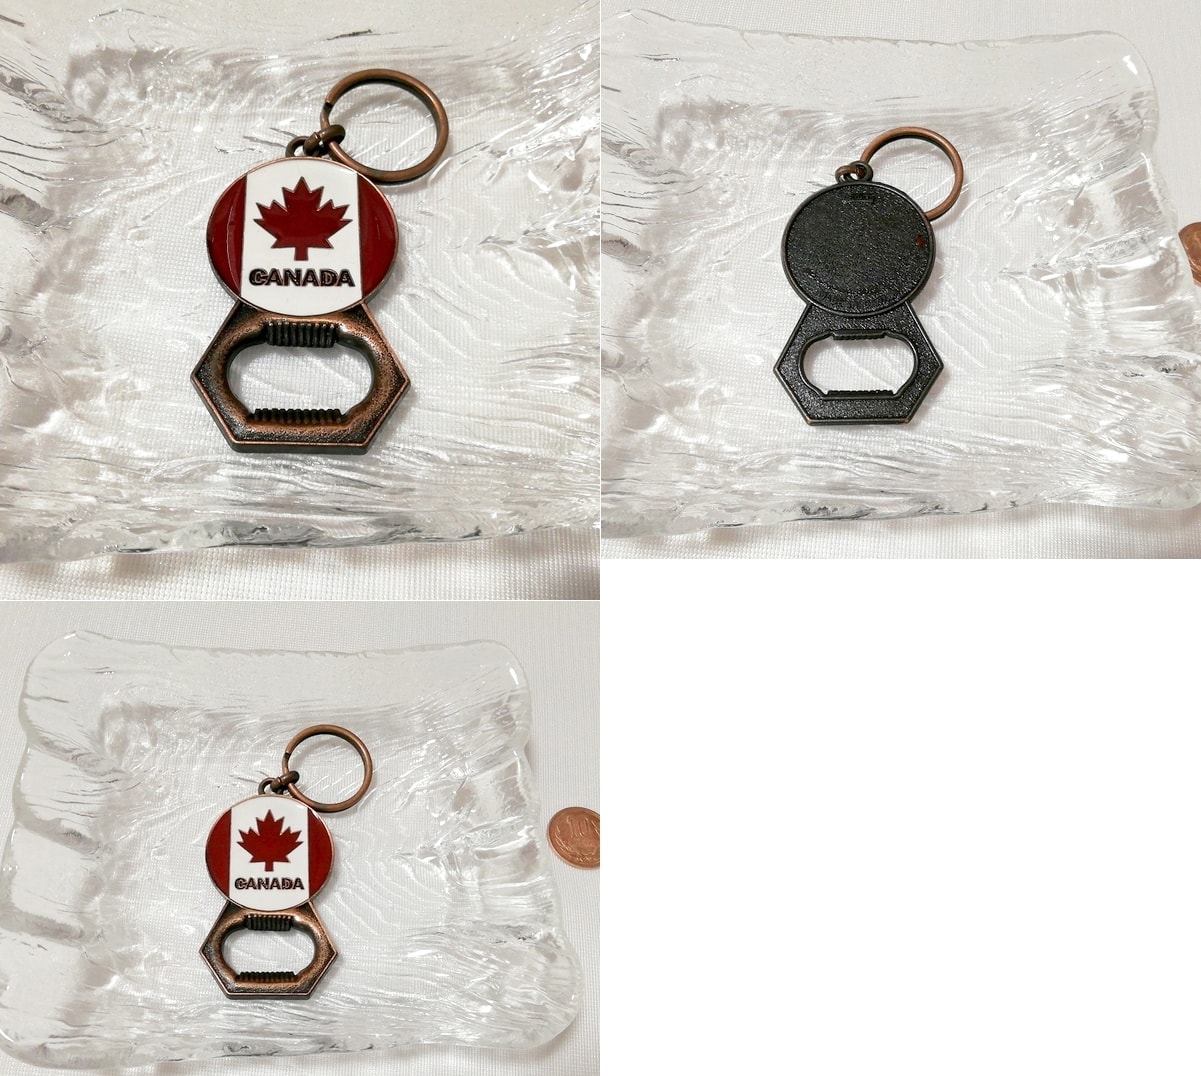 CANADA カナダ国旗キーホルダー/ジュエリー/アクセサリー Canada canadian flag keychains jewelry accessories, 雑貨, キーホルダー, 一般